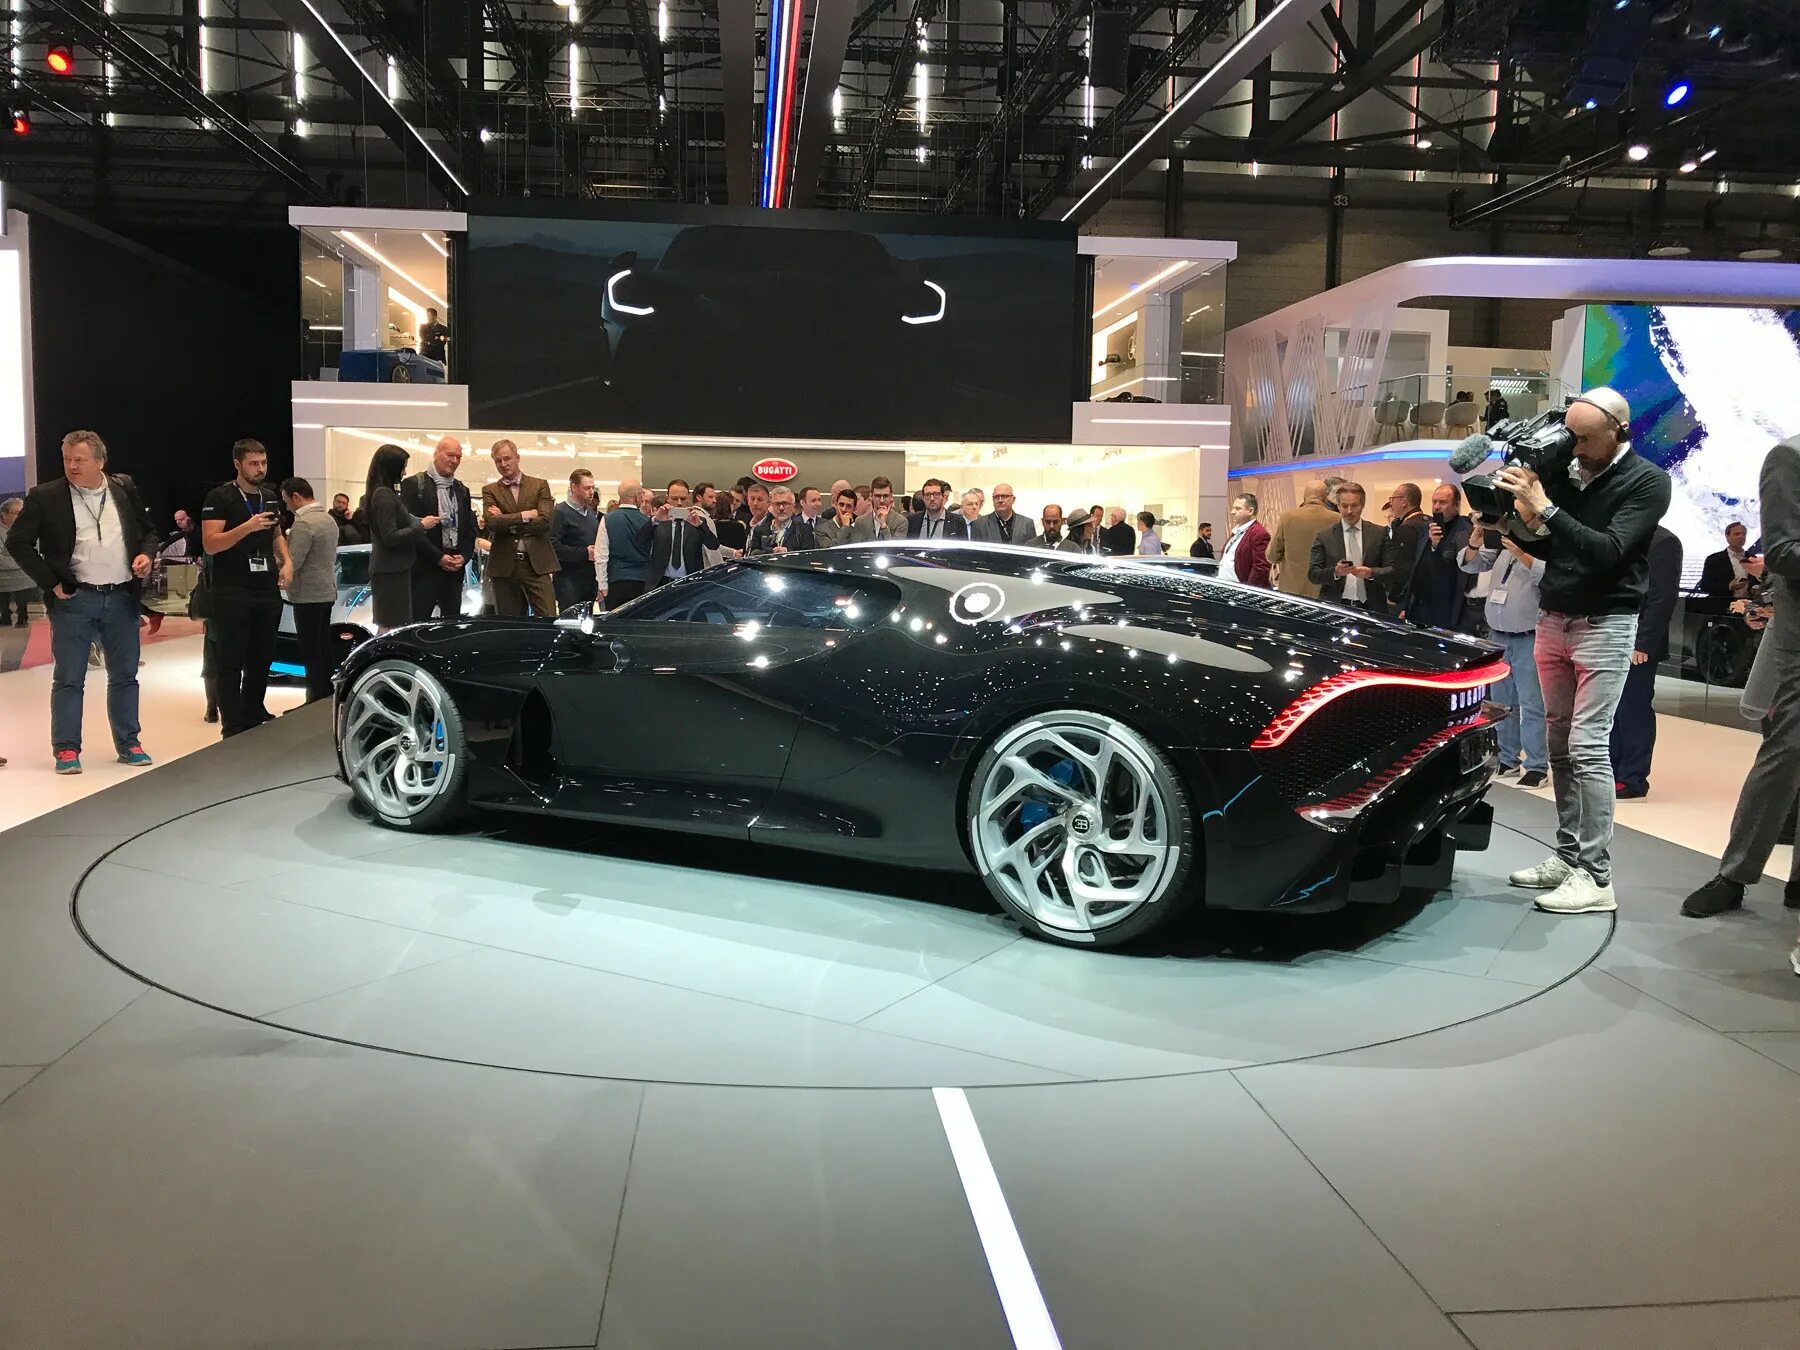 Купить автомобиль за миллион рублей. Автосалон Бугатти. Выставка авто Bugatti. Самый дорогой автосалон в мире. Машина за 7 миллионов рублей.